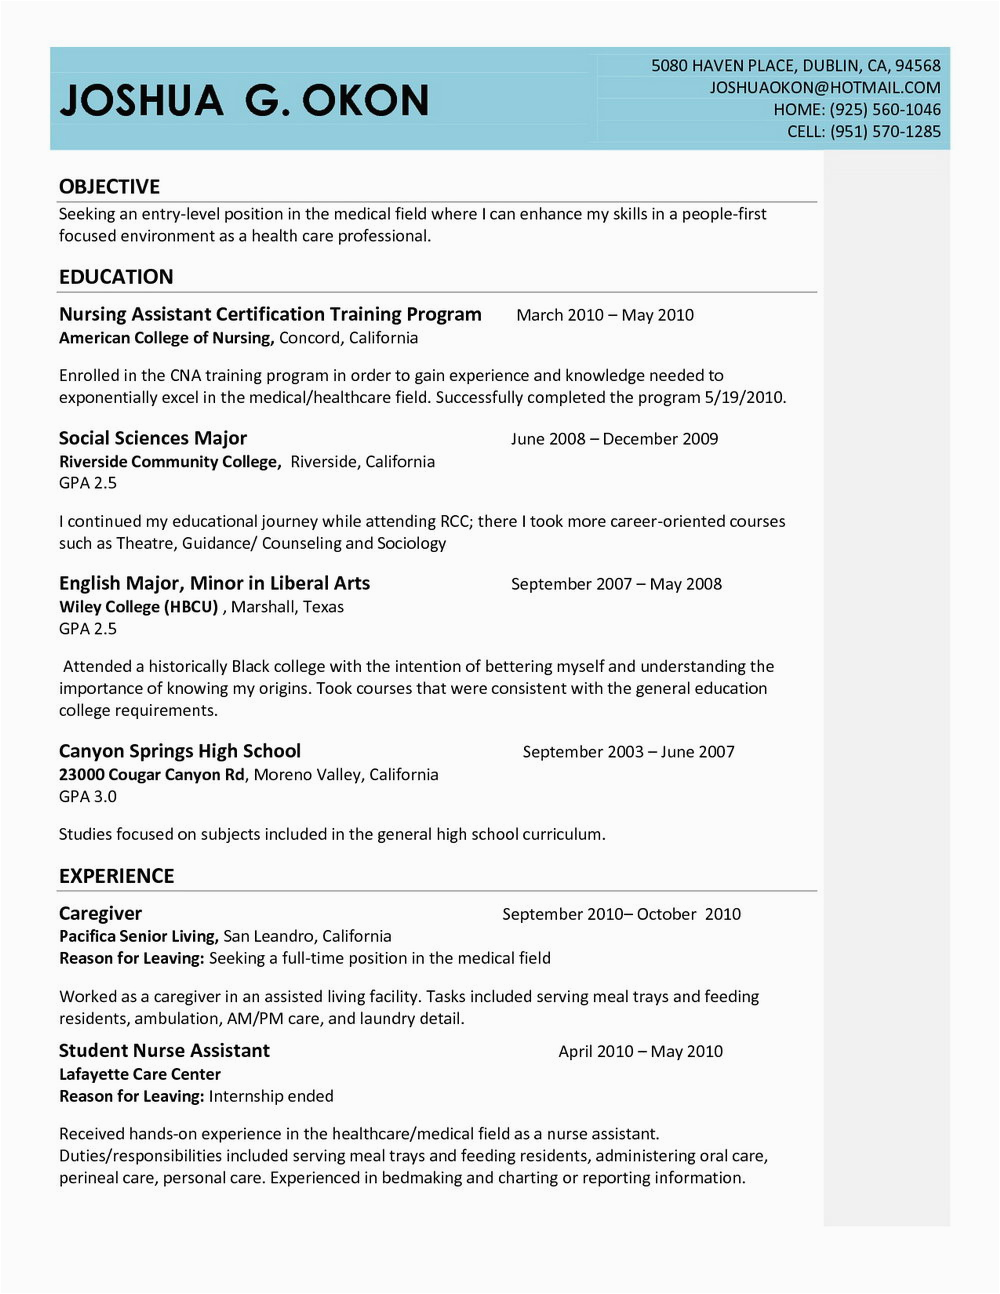 sample resume for nursing assistant entry level